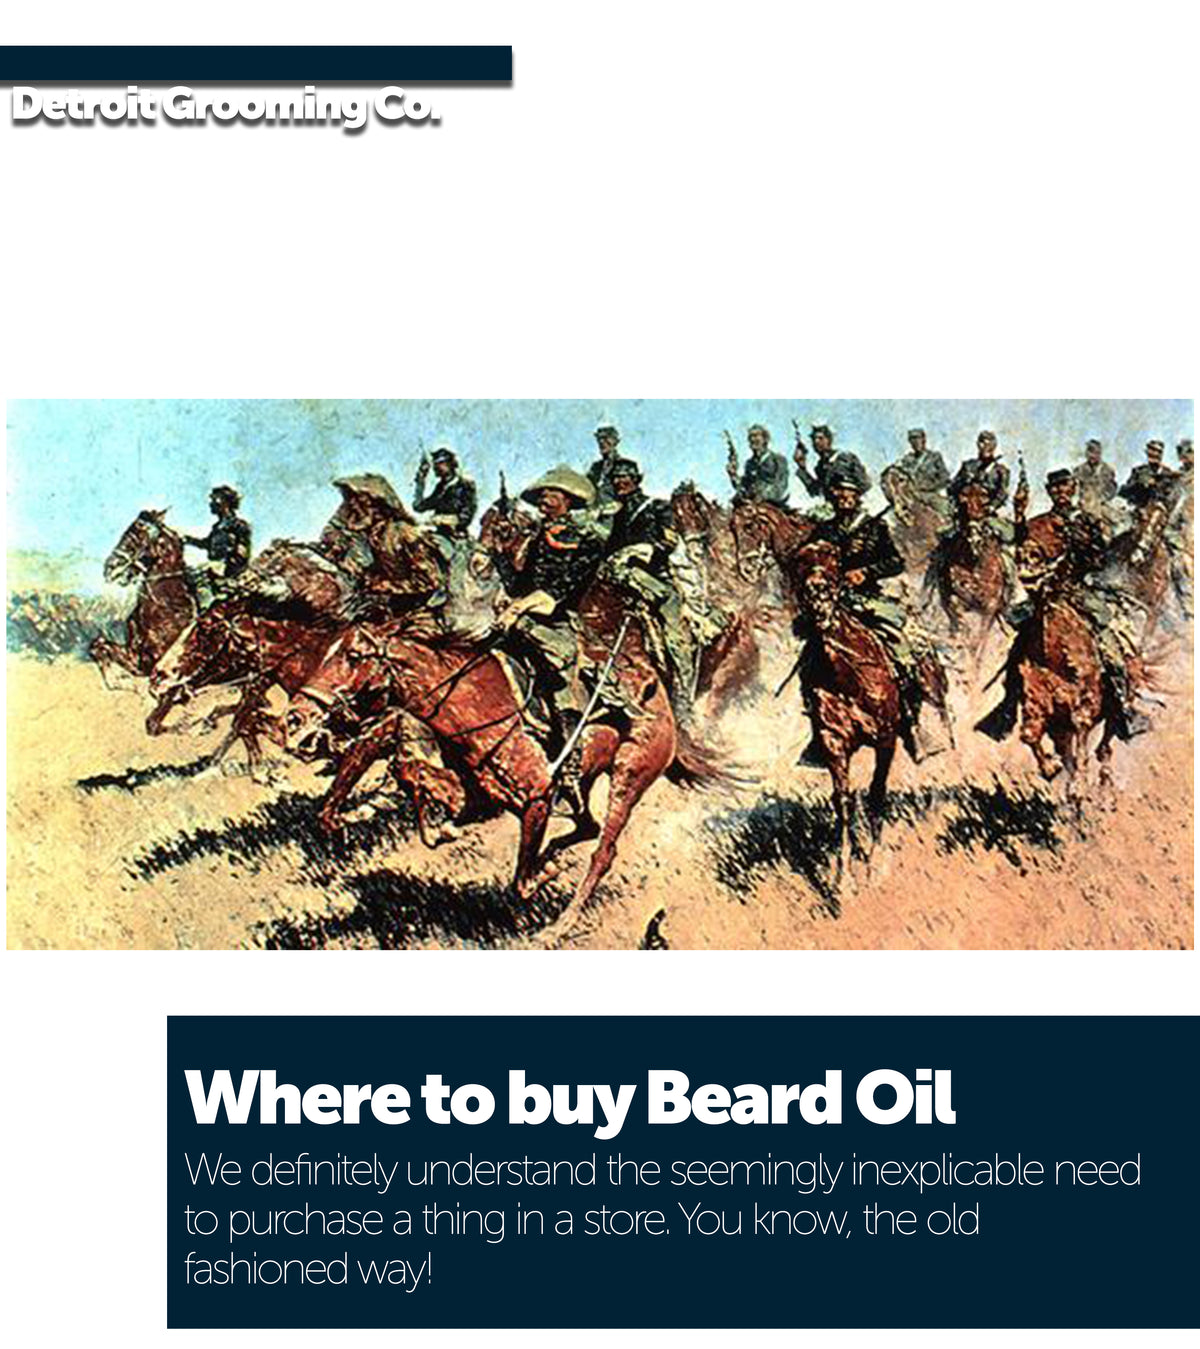 Where to buy beard oil